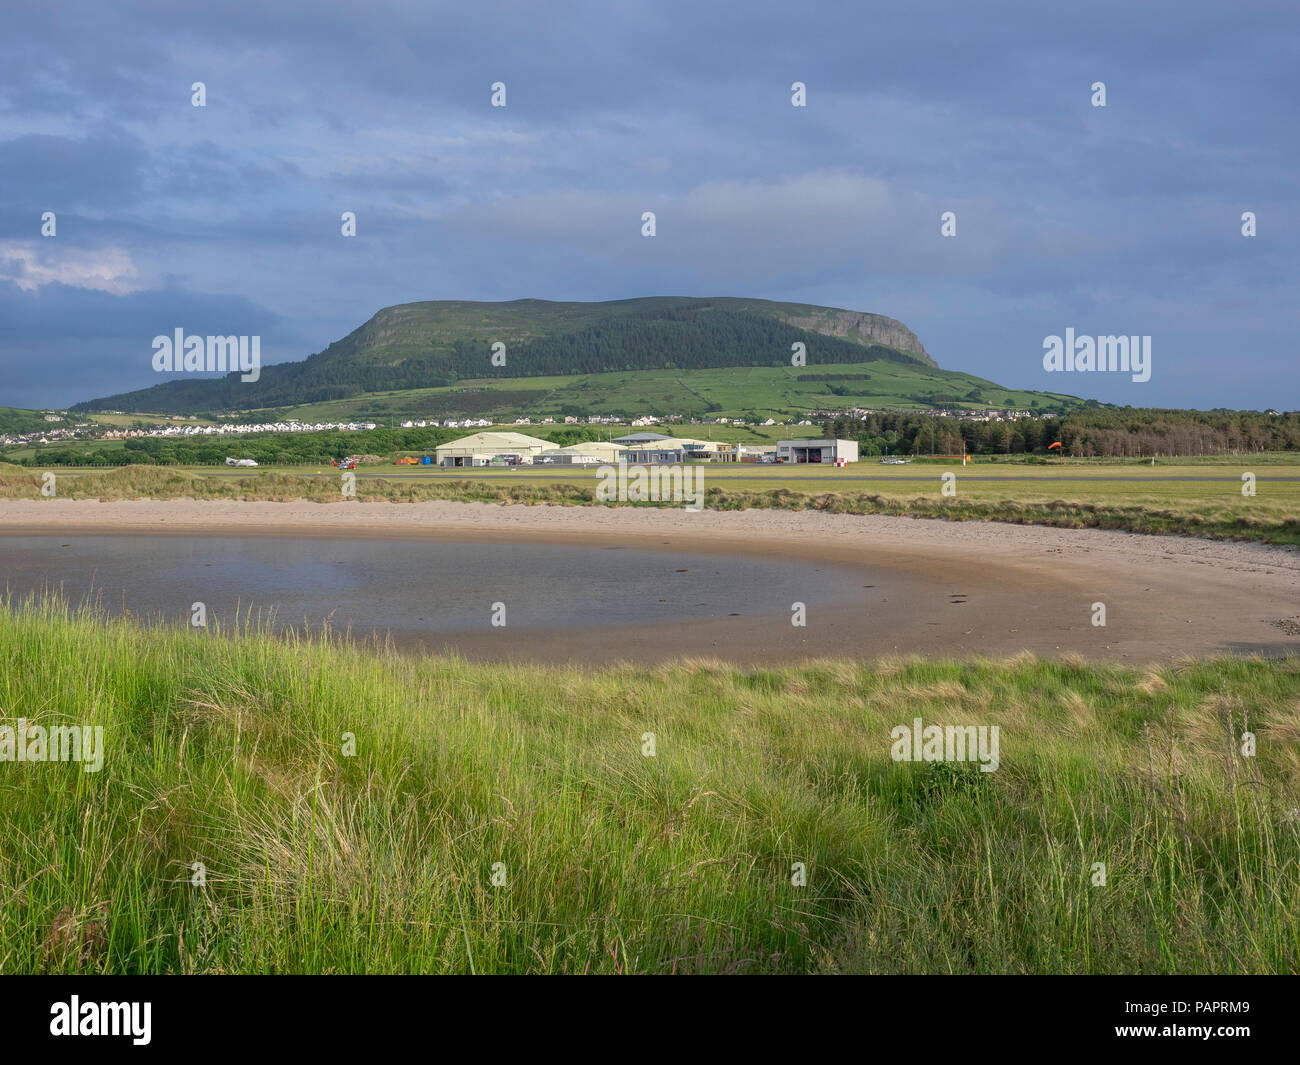 Sligo Airport from the beach, Strandhill, County Sligo, Repuplic of Ireland Stock Photo